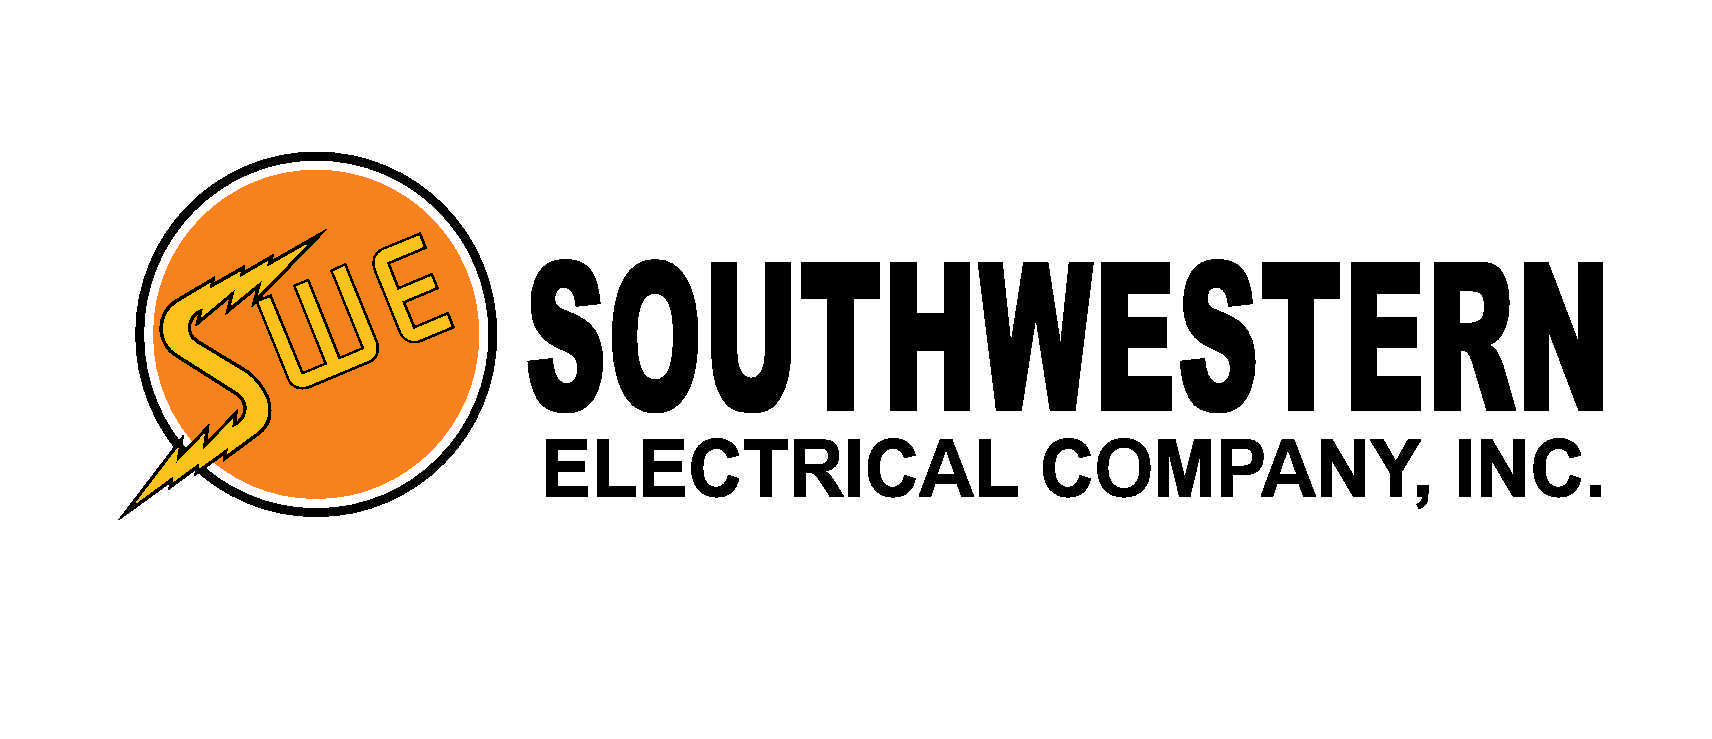 Southwest Company Logo - Southwestern Electrical Co. Inc. 1638 E. First Wichita, KS